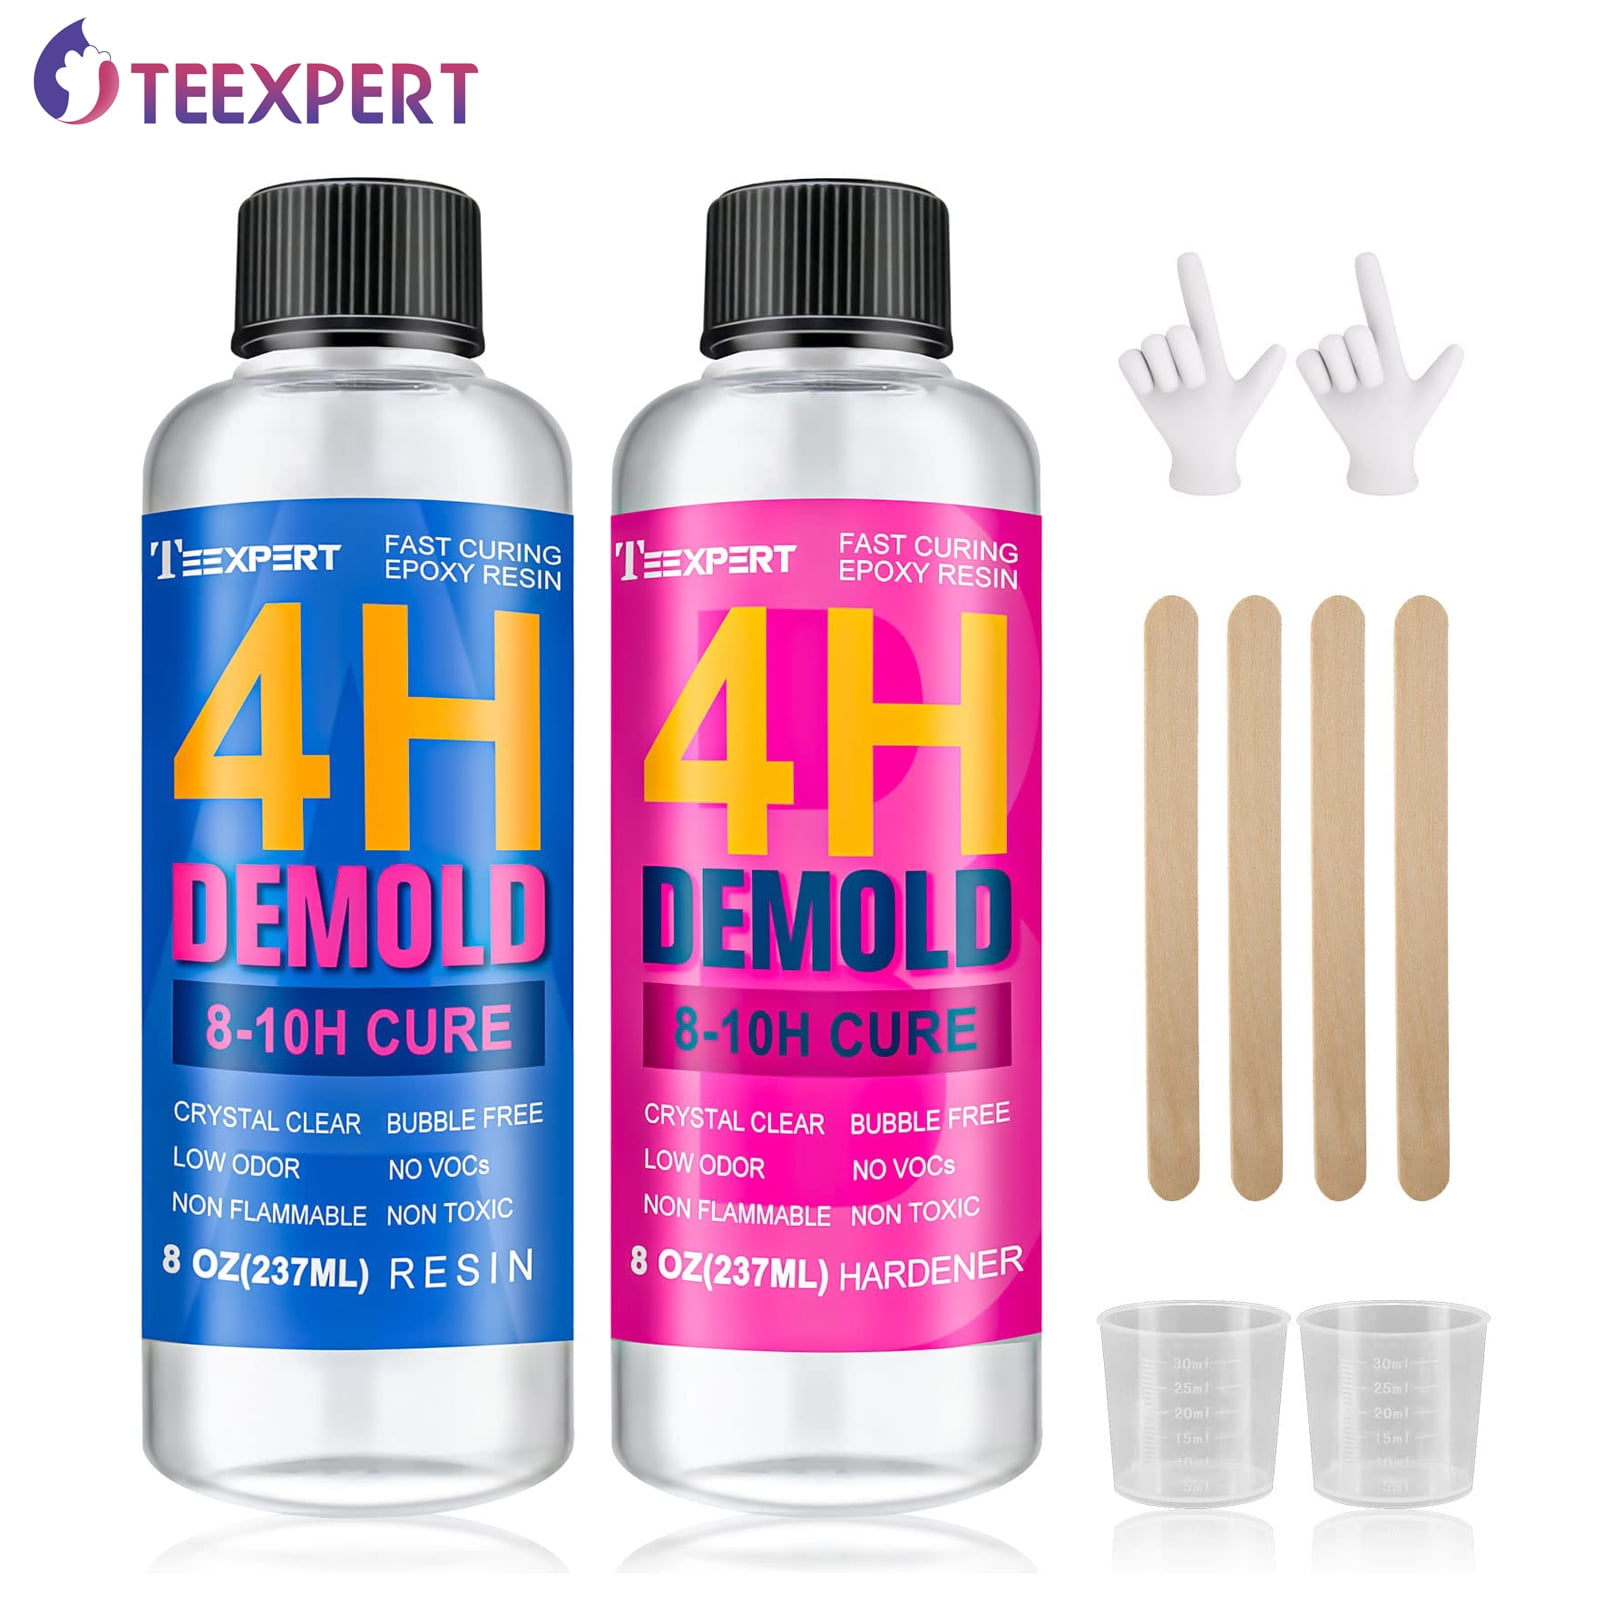 GDT Tempcryl Resin Powder 25g And Liquid 15ml Set